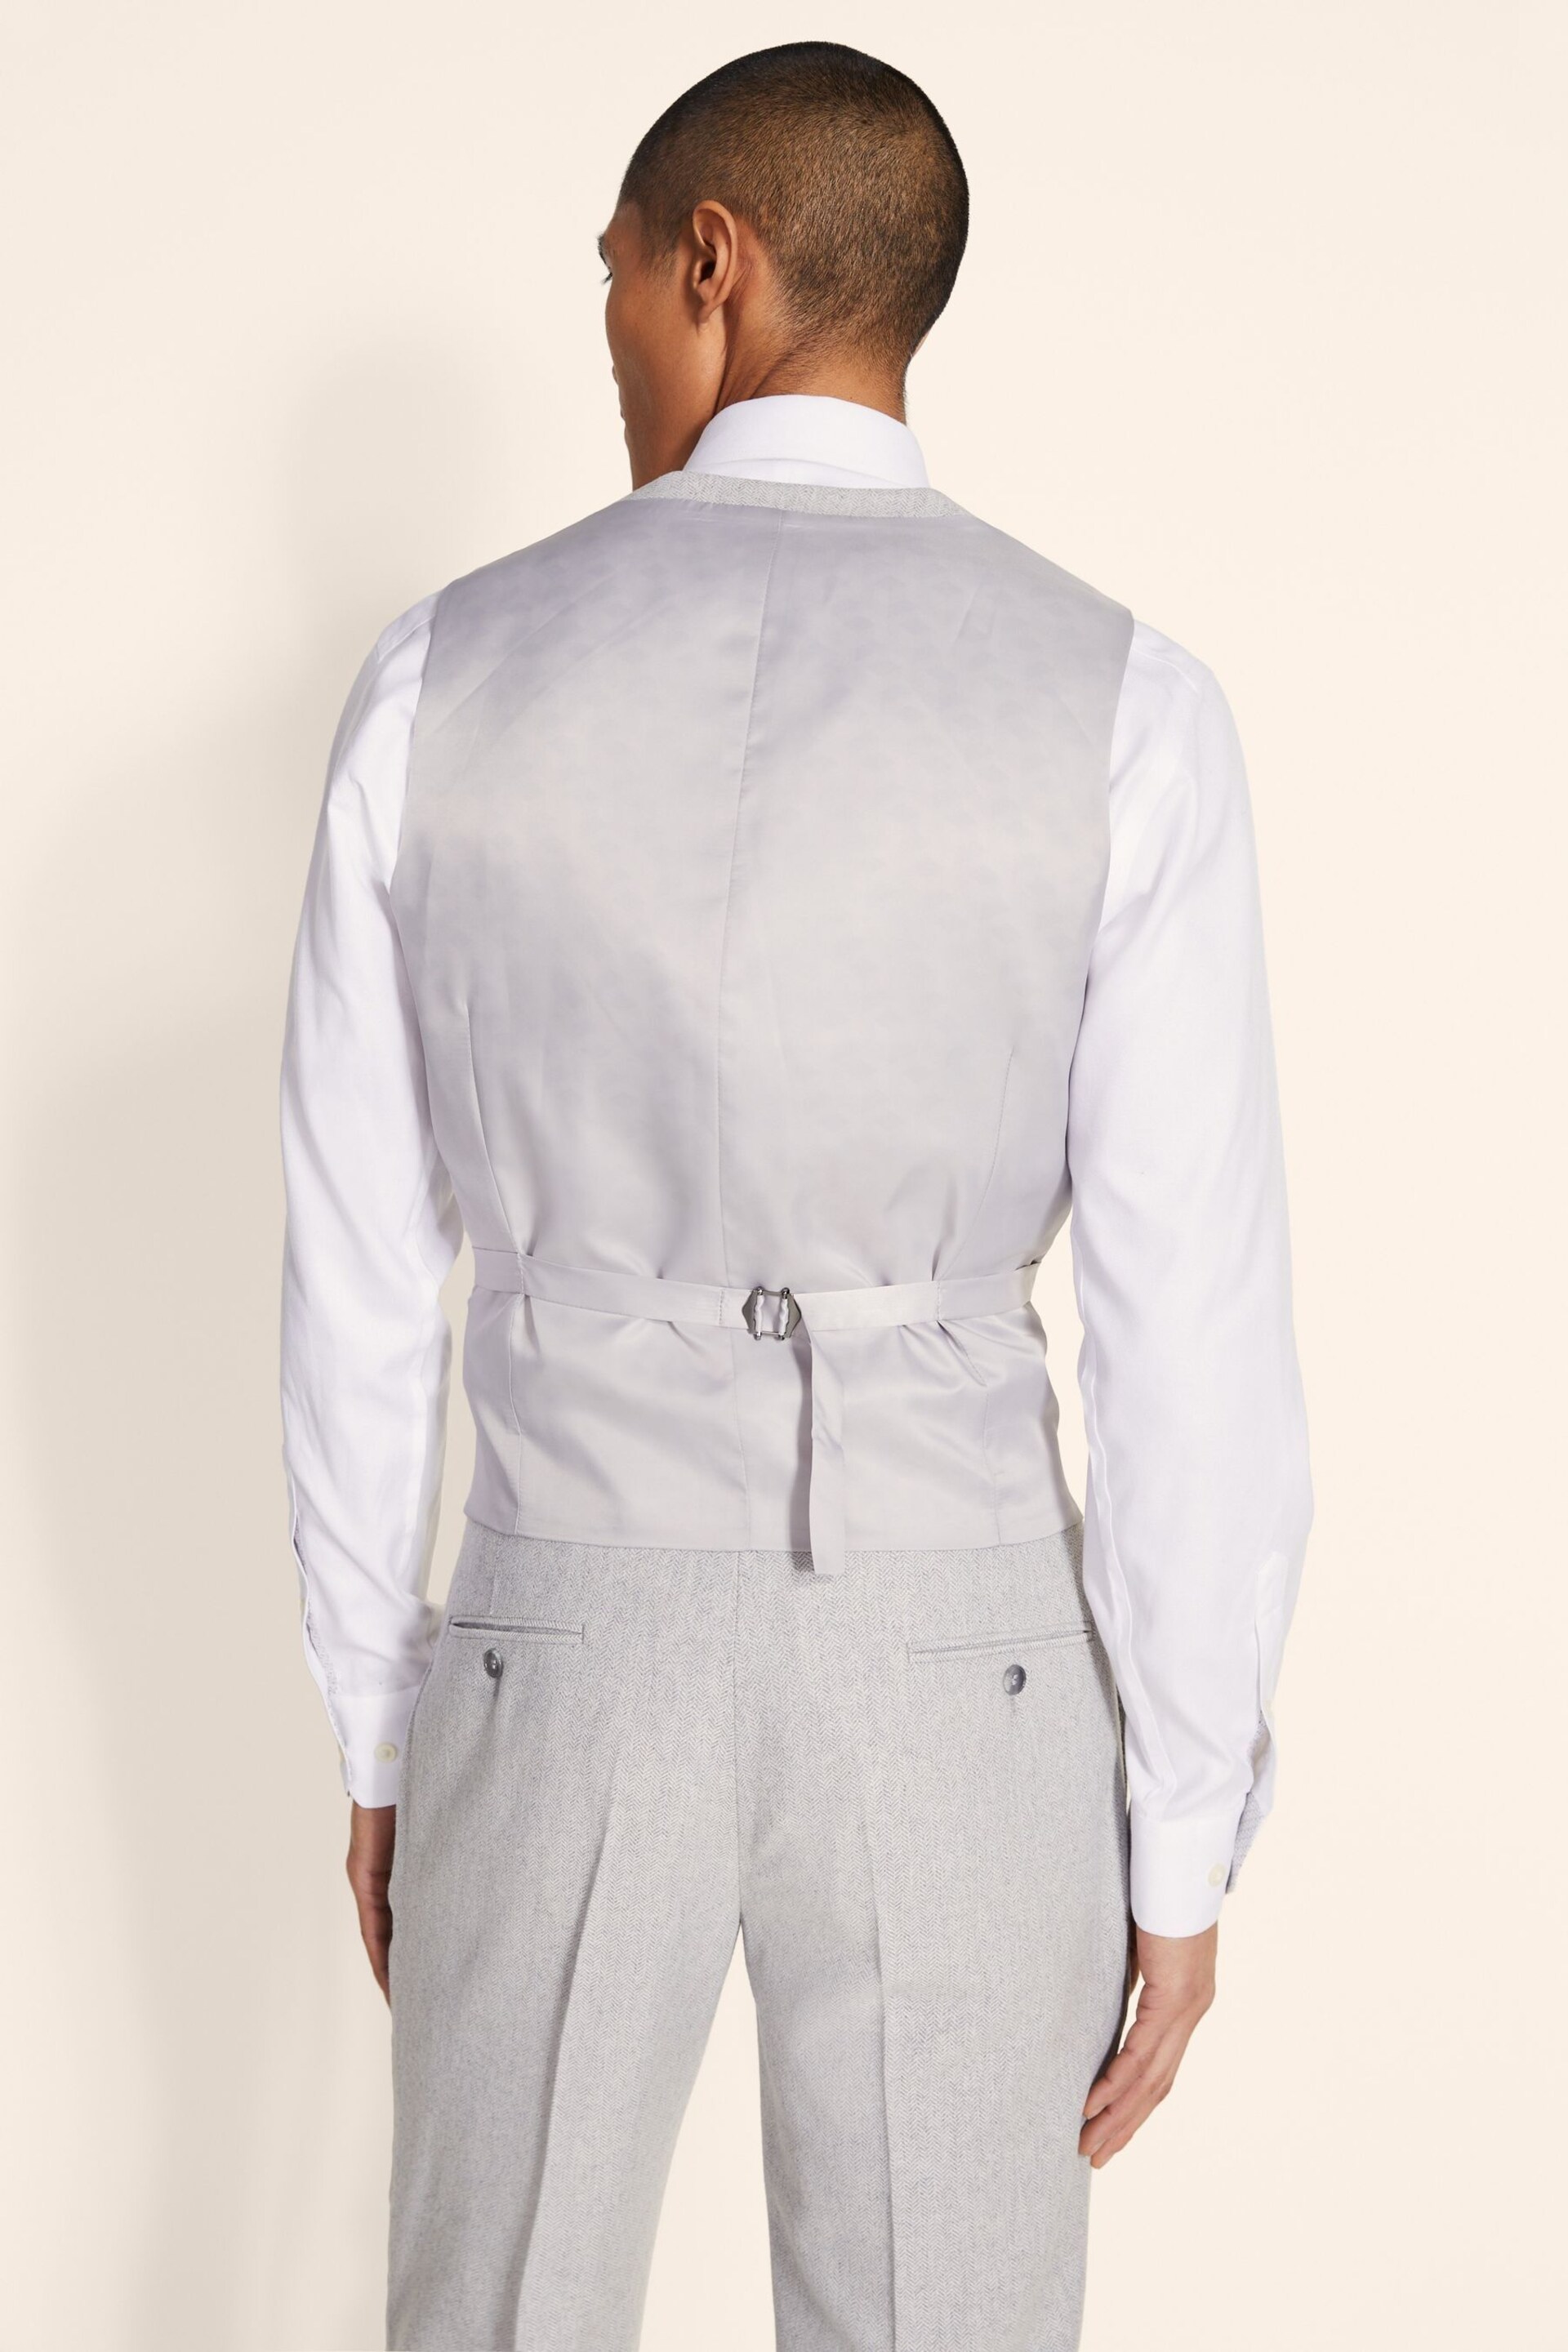 MOSS Light Grey Tailored Fit Herringbone Waistcoat - Image 2 of 2